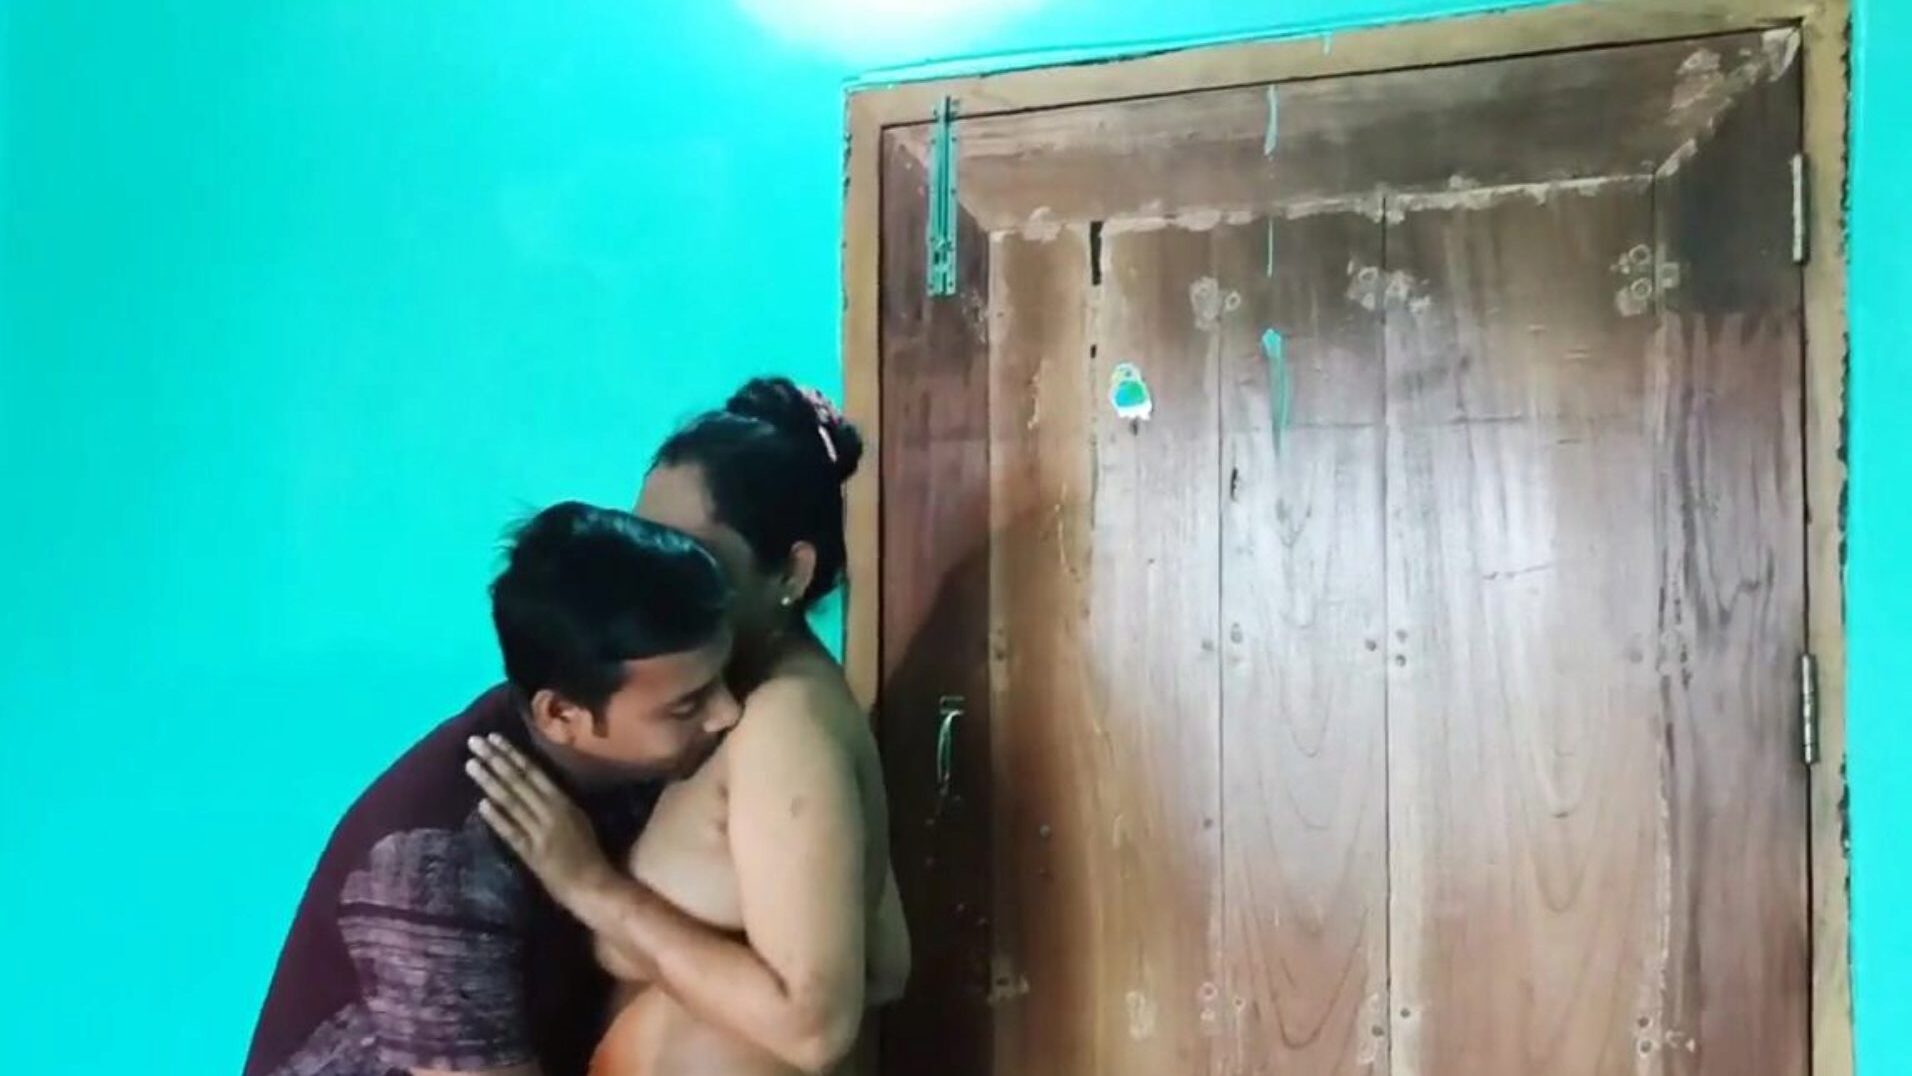 Desi bengali sex video naked ، free asian porn 6c: xhamster watch desi bengali sex video naked movie on xhamster ، أغلى صفحة ويب أنبوب ربط عالي الدقة مع أطنان من أفلام الجنس xxn الآسيوية المجانية والشرجية